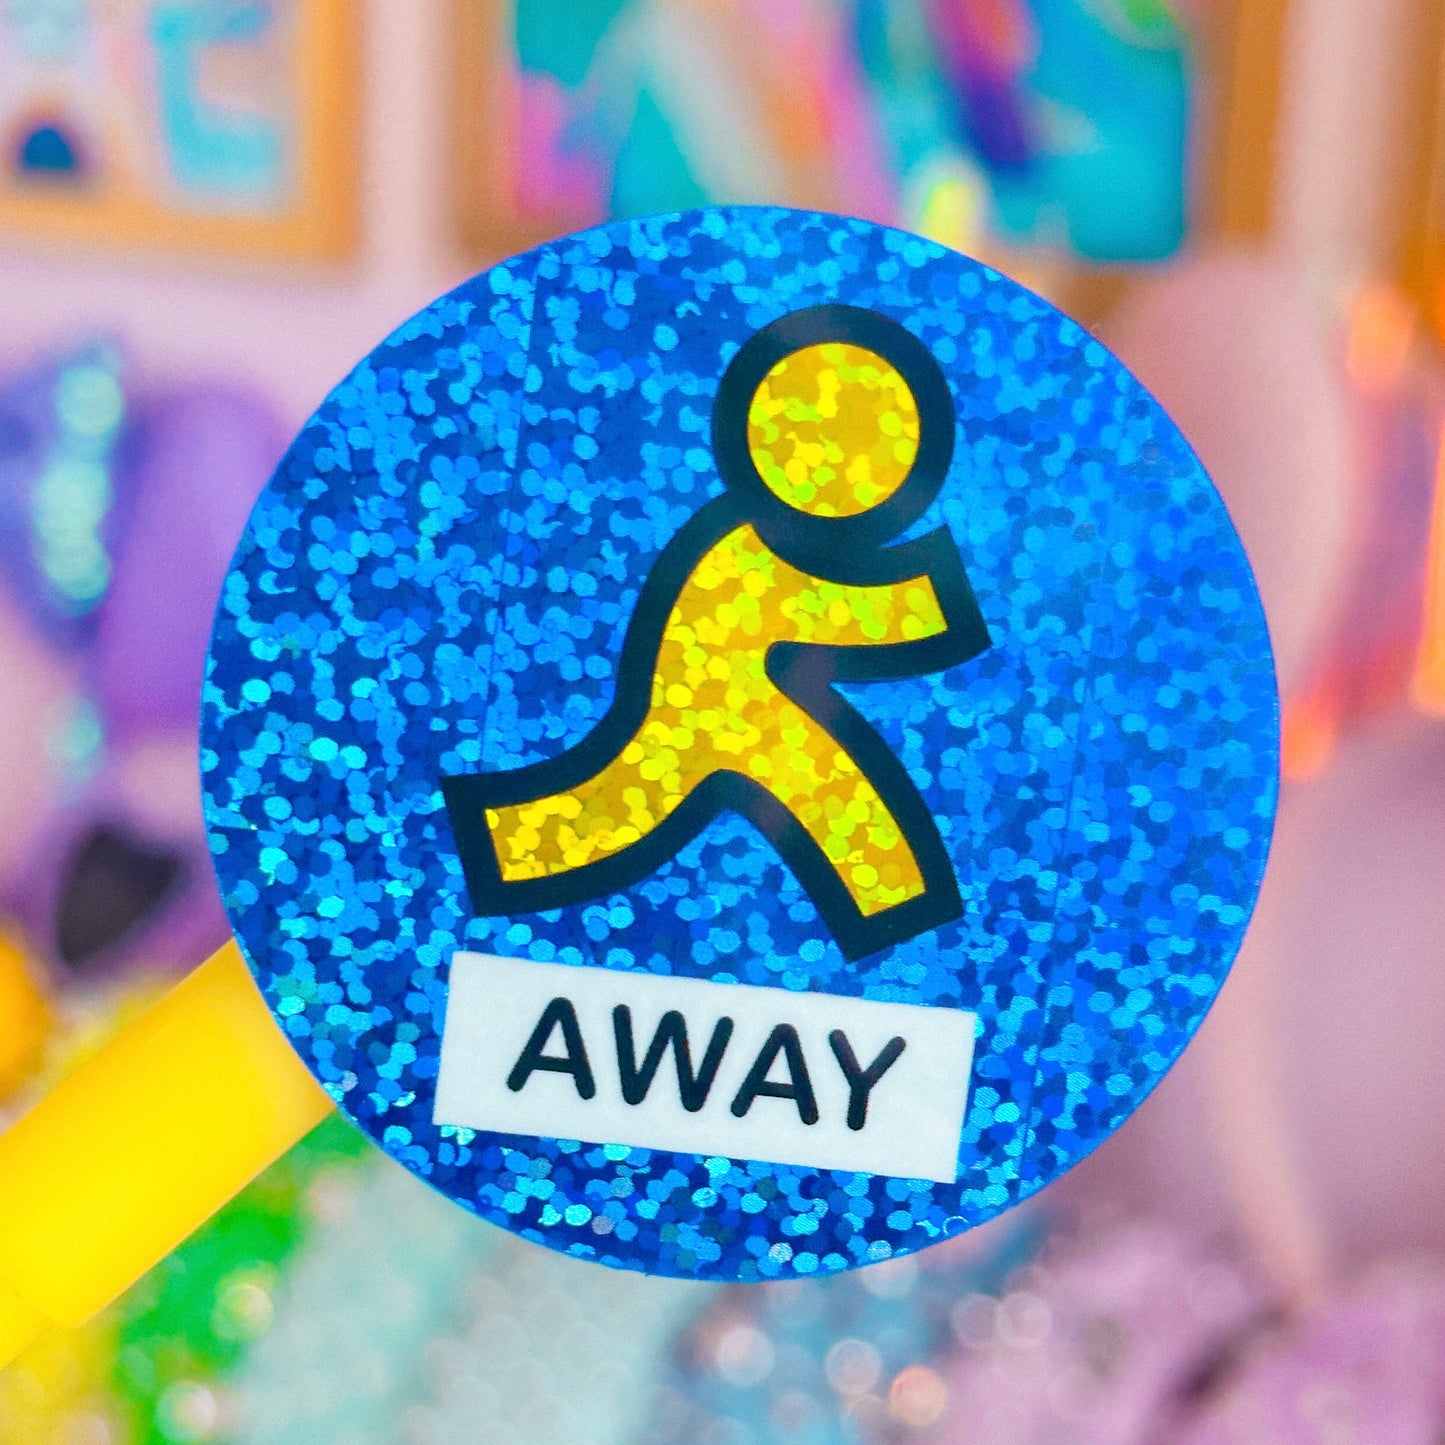 Glitter Waterproof Sticker - AIM Chat "AWAY"